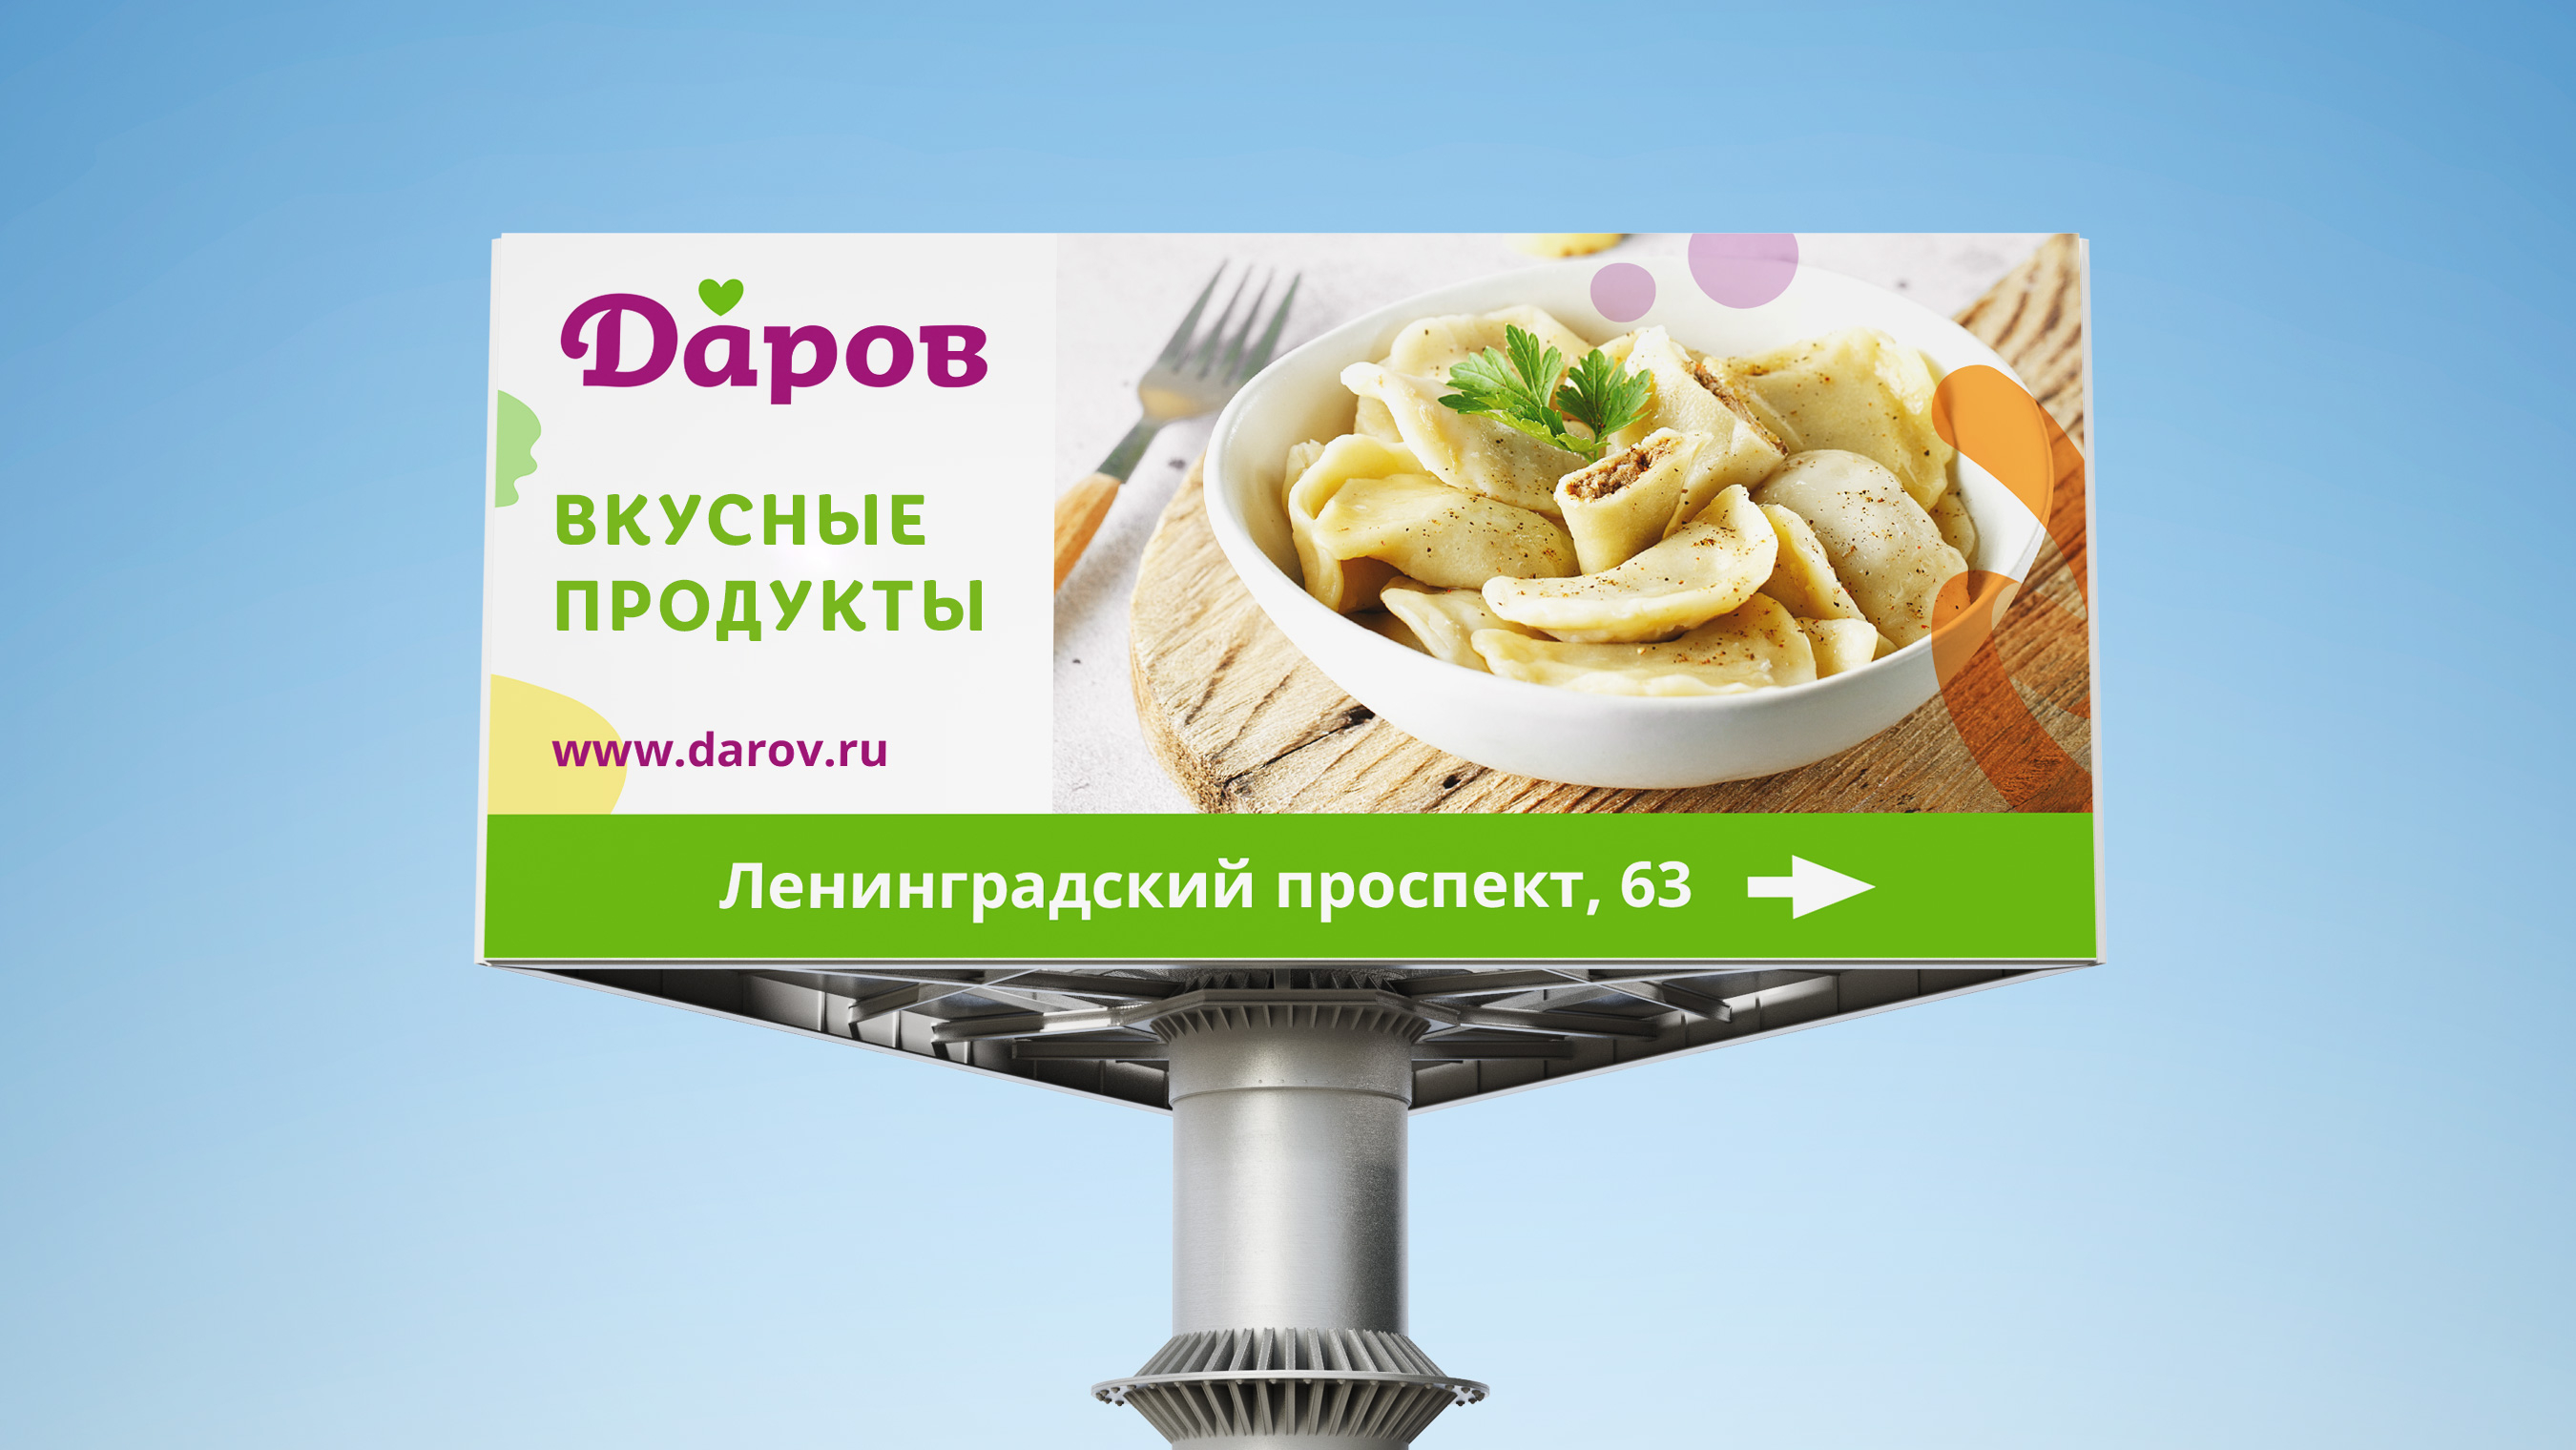 Реклама магазина Даров